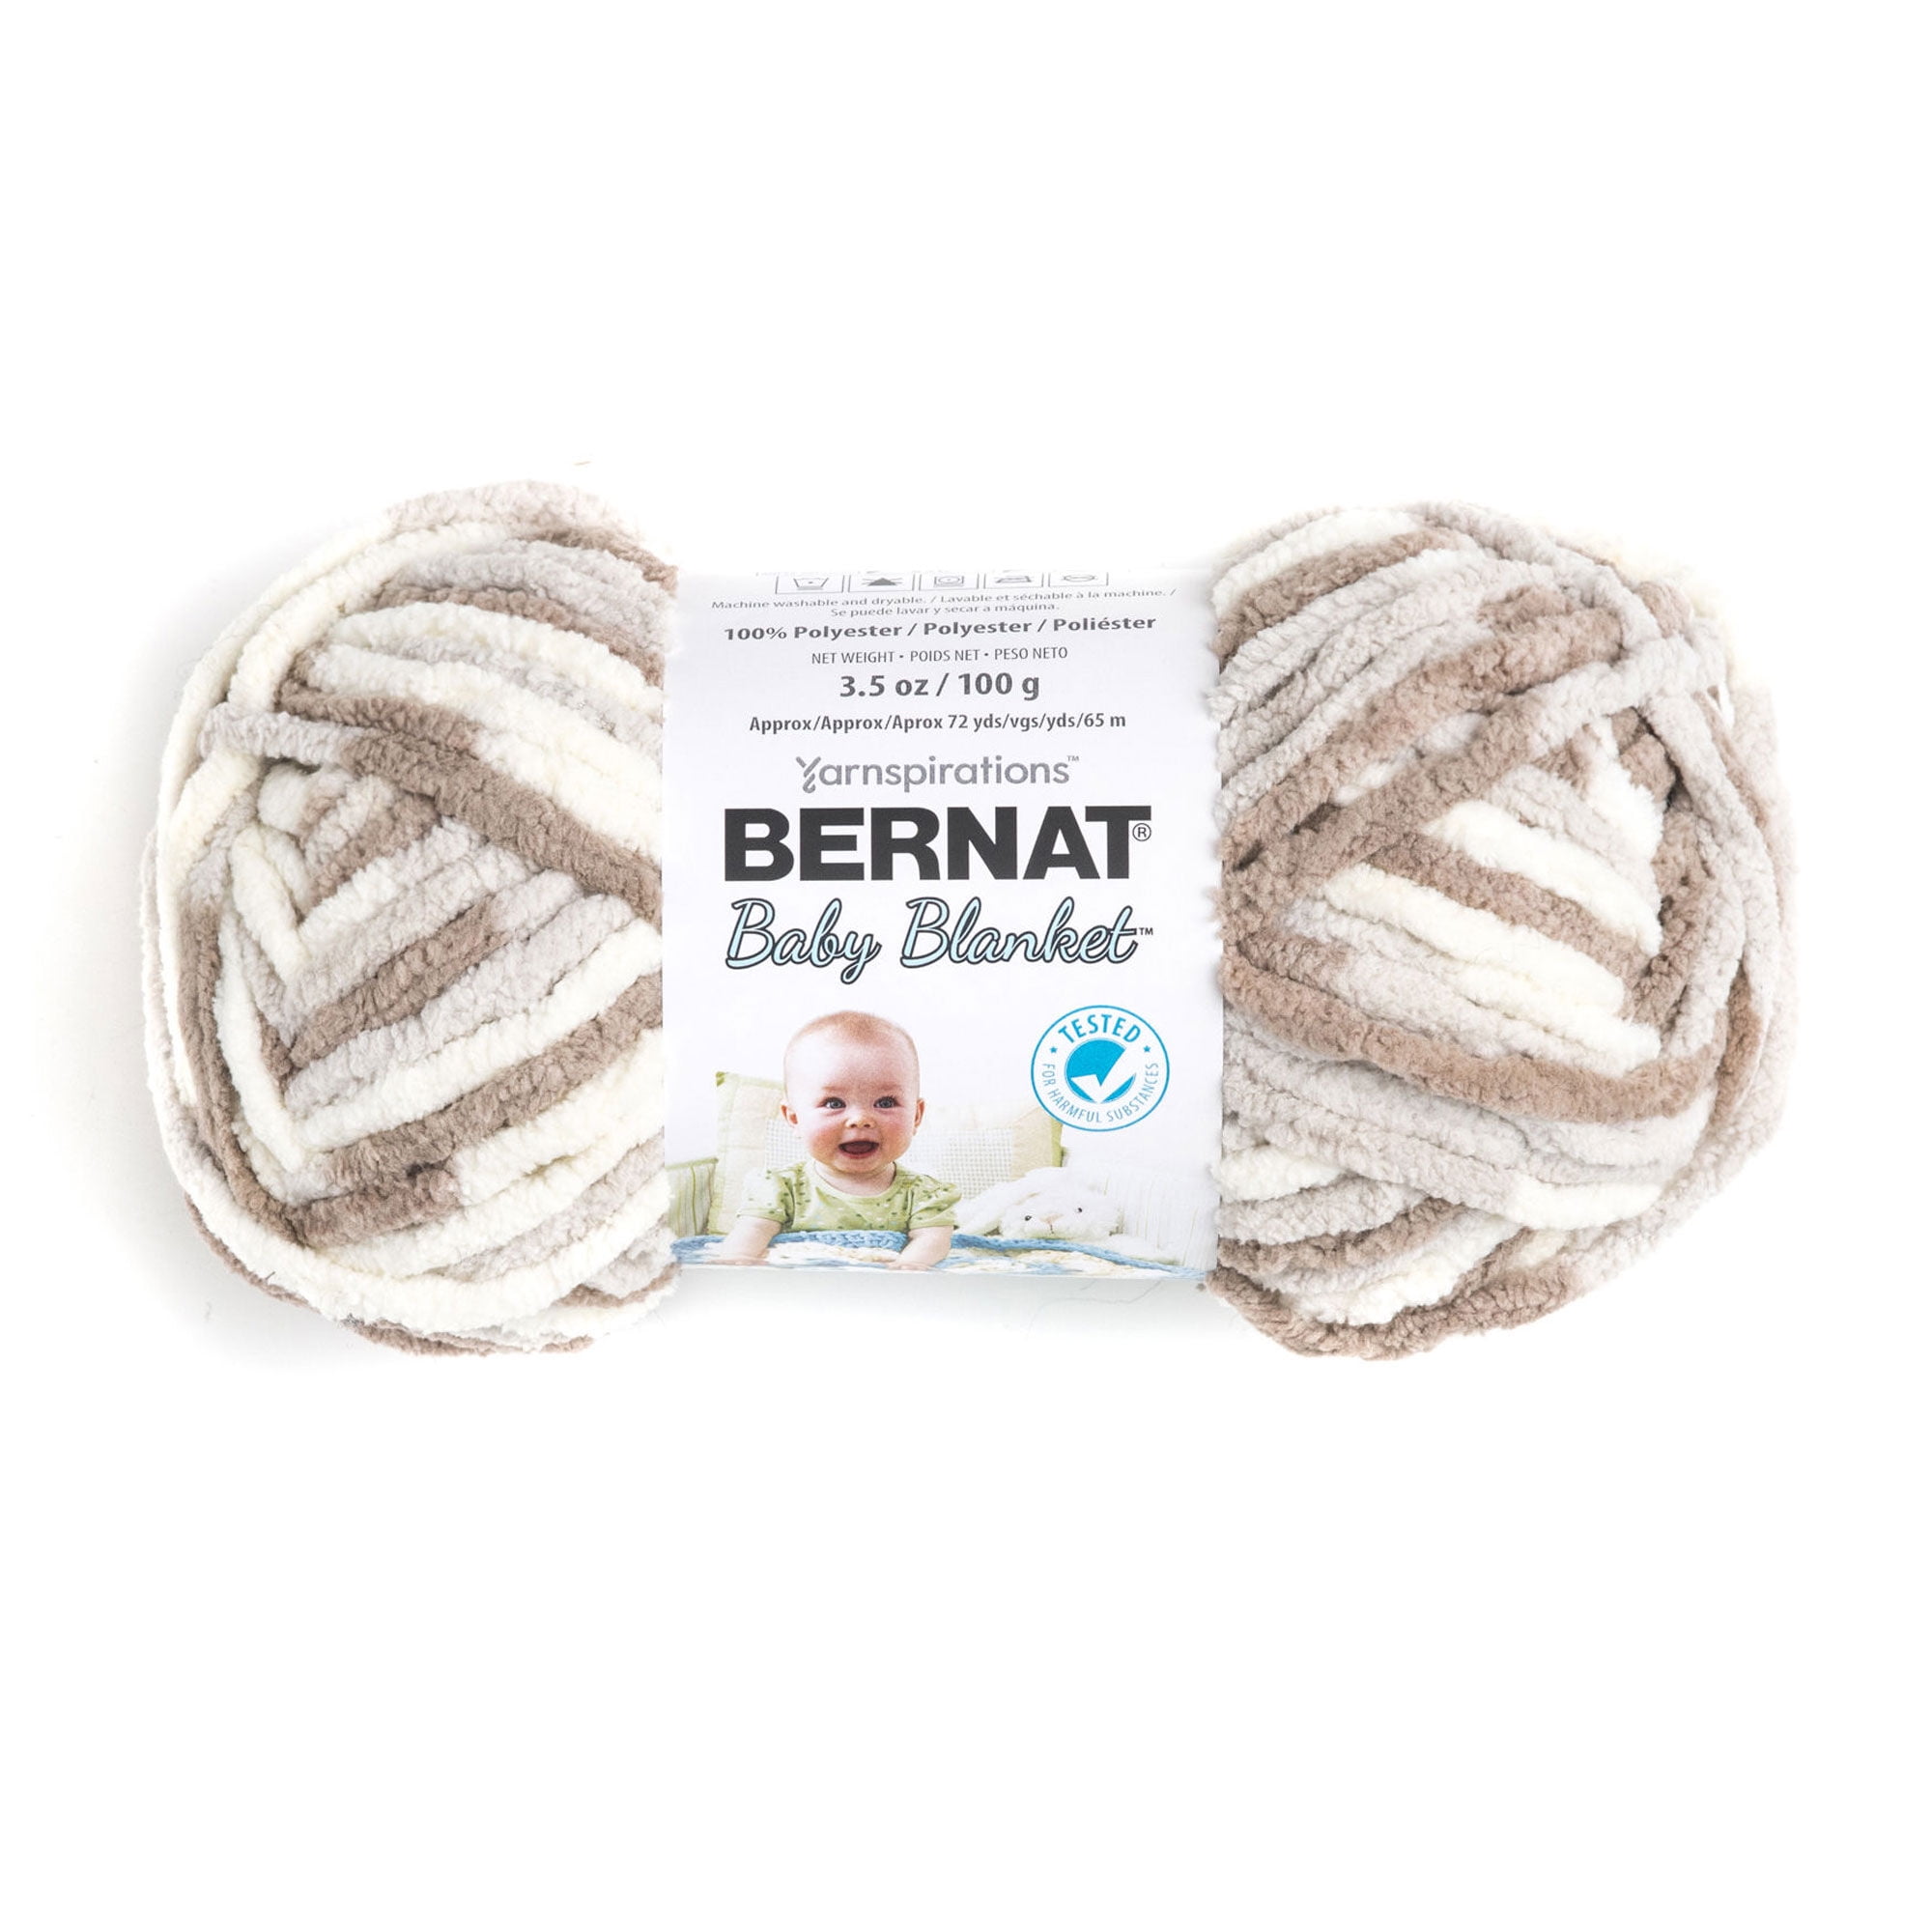 Bernat Blanket Yarn-Oceanside, 1 count - Metro Market